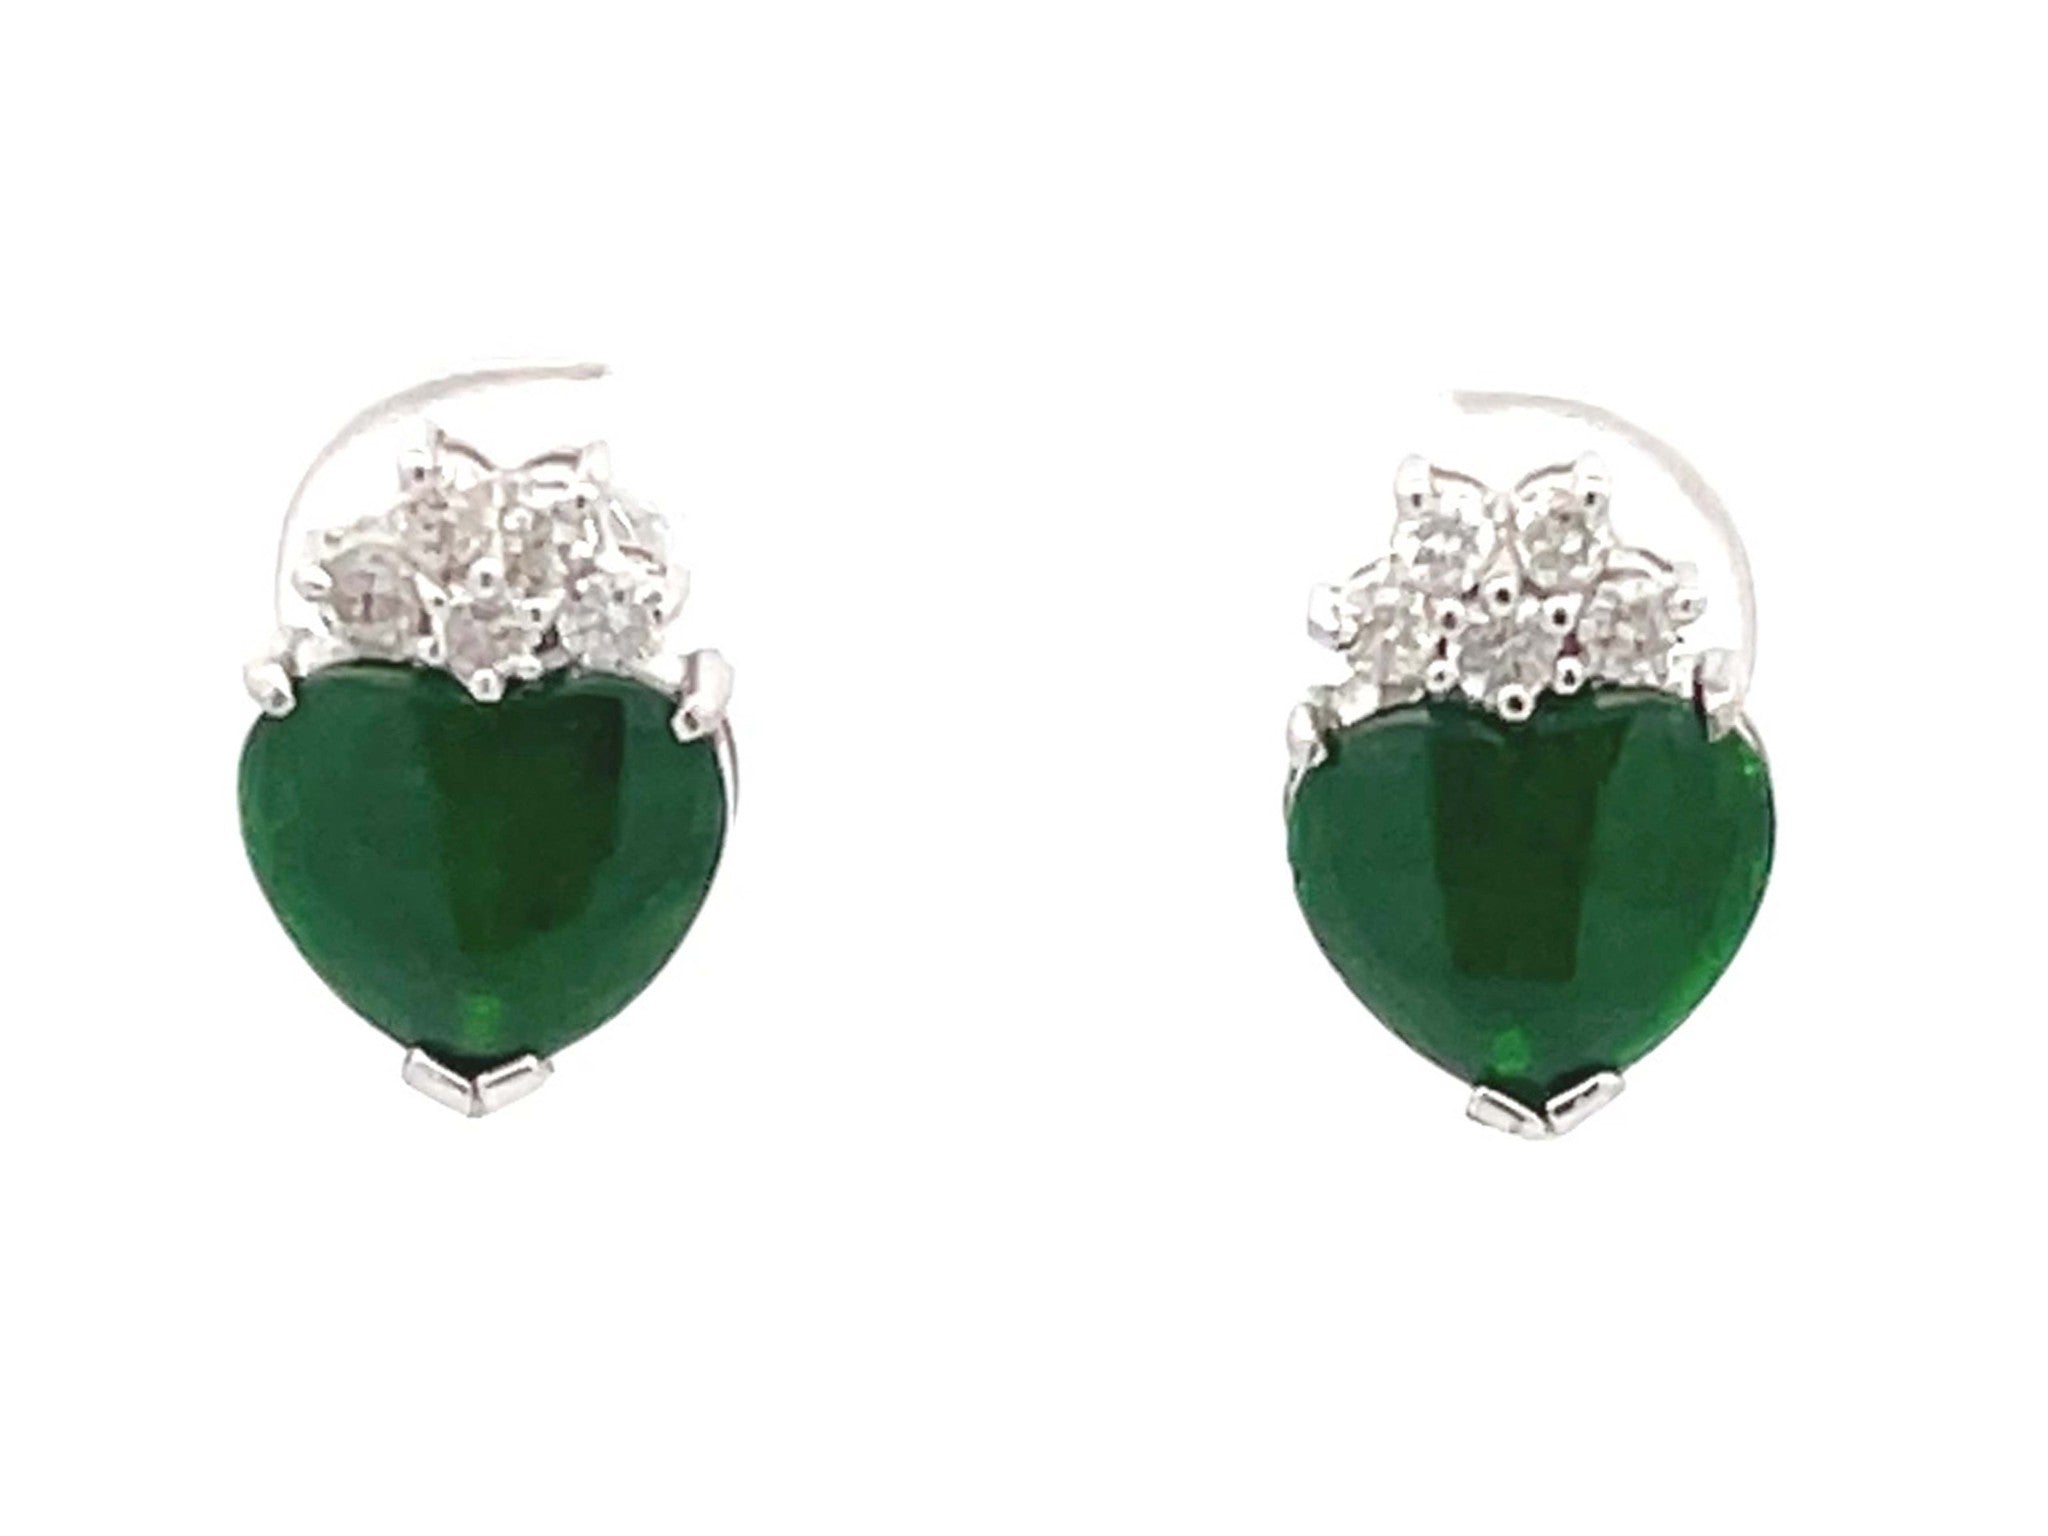 Imperial Jade Heart and Diamond Stud Earrings in 18K White Gold